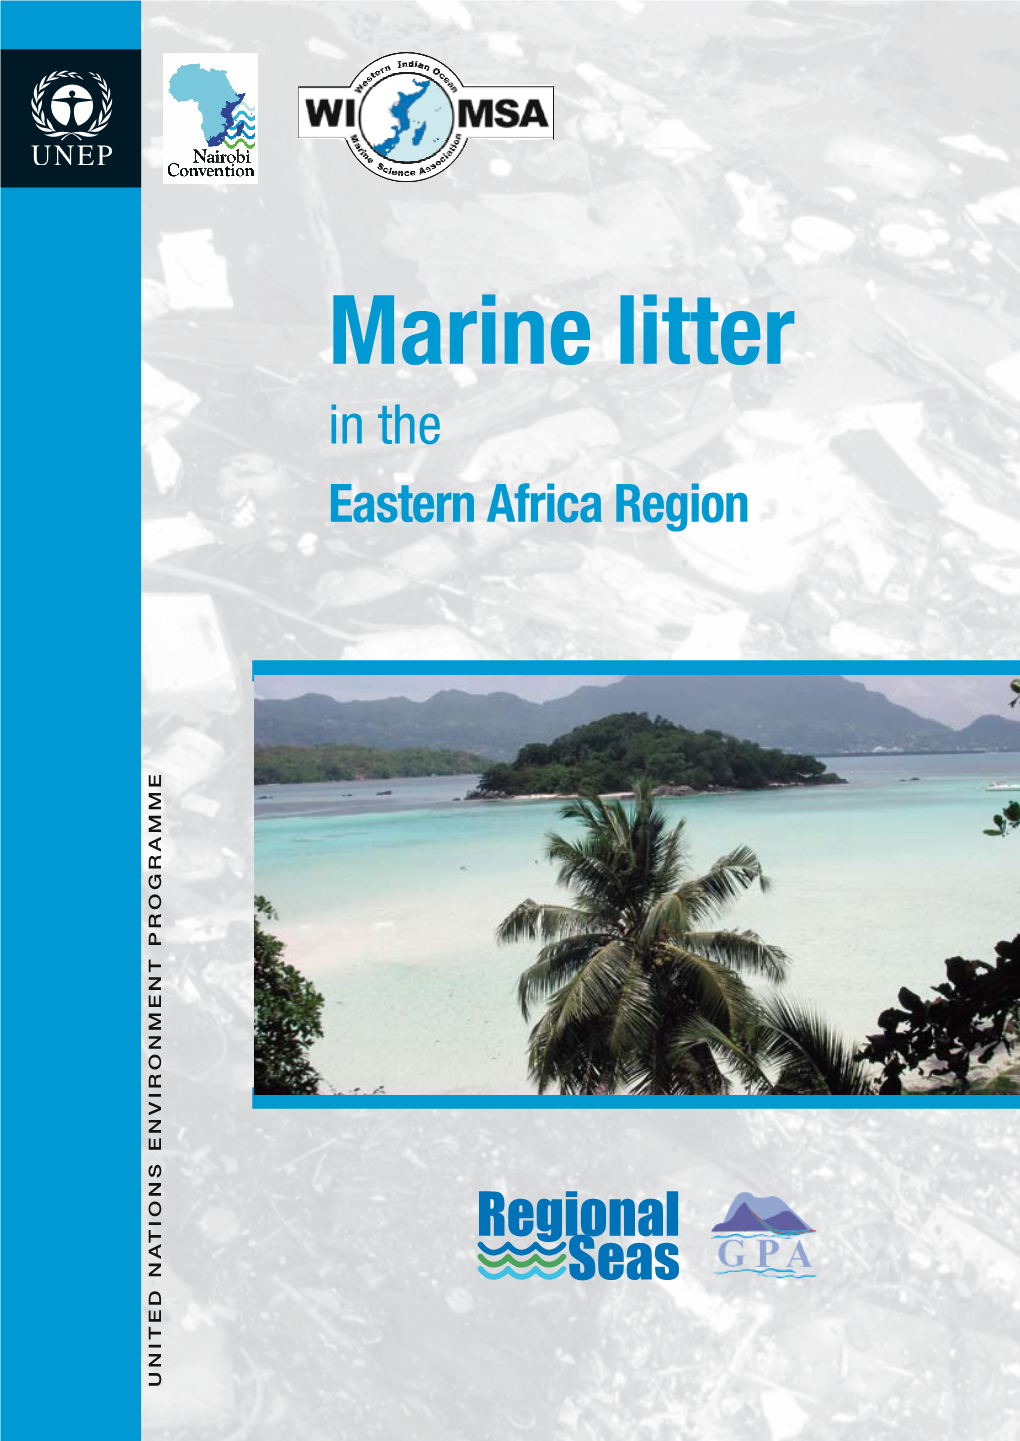 Marine Litter in the Eastern Africa Region Marine Litter in the Eastern Africa Region Africa Eastern the in Litter Marine